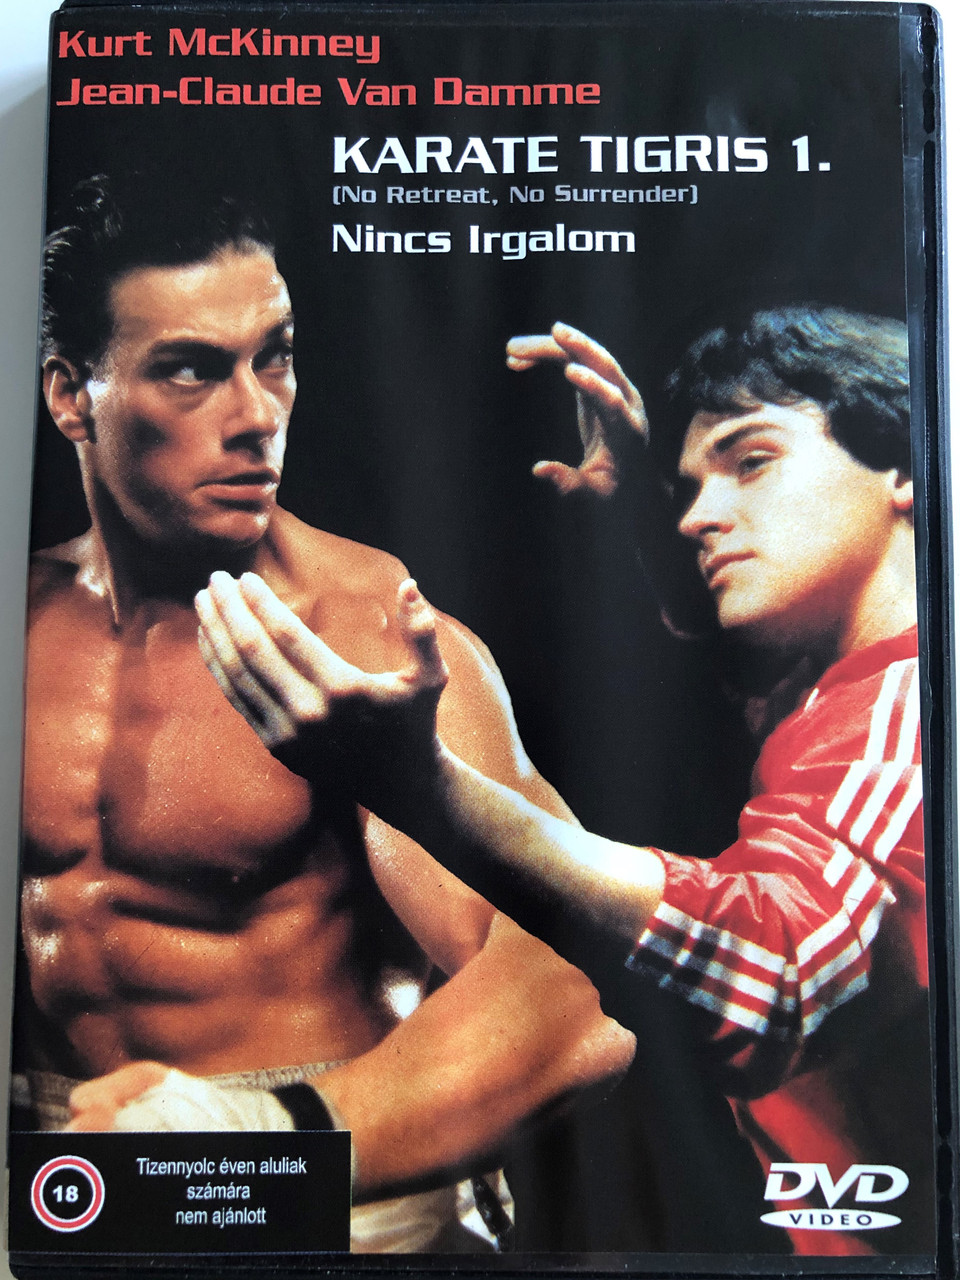 No Retreat, No Surrender DVD 1985 Karate tigris 1. - Nincs irgalom /  Directed by Corey Youen / Starring: Kurt McKinney, Jean-Claude Van Damme -  bibleinmylanguage